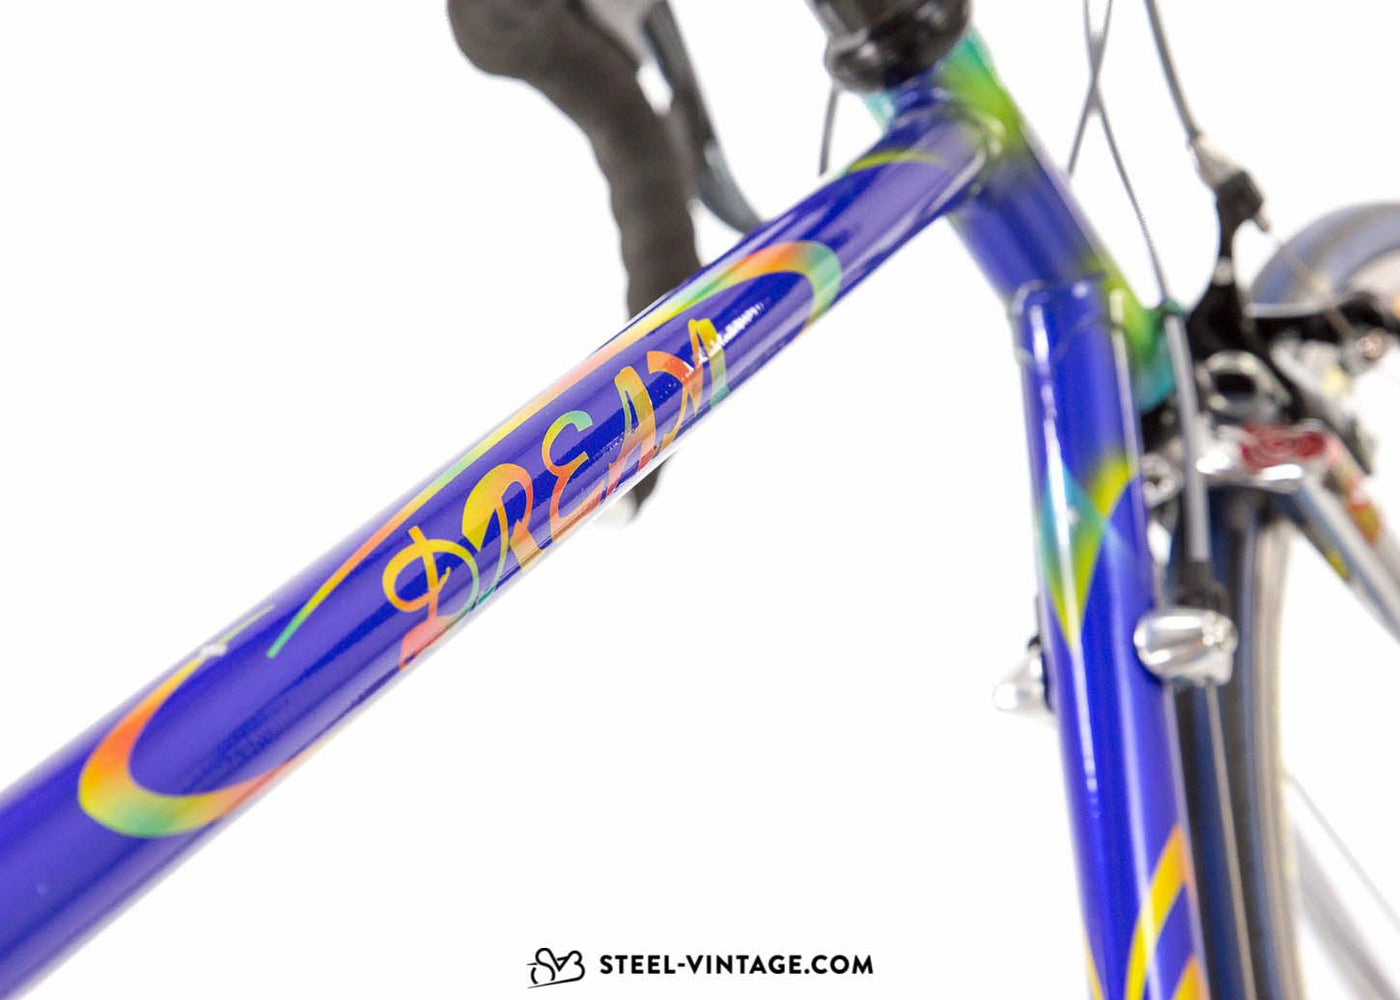 CBT Italia Dream Road Bike 1990s - Steel Vintage Bikes